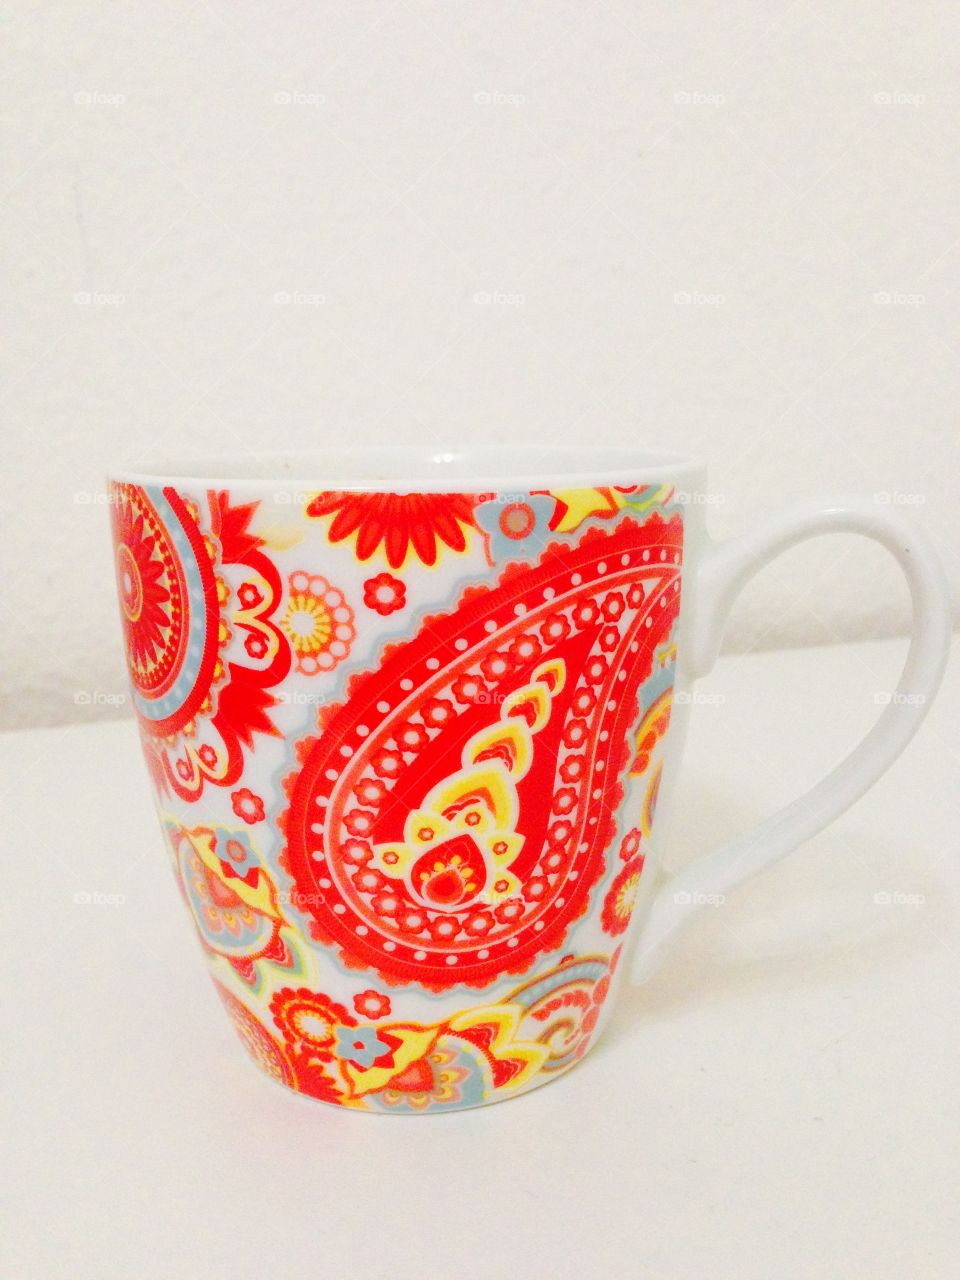 My favorite mug 
Coffee lovers 
Red designed 